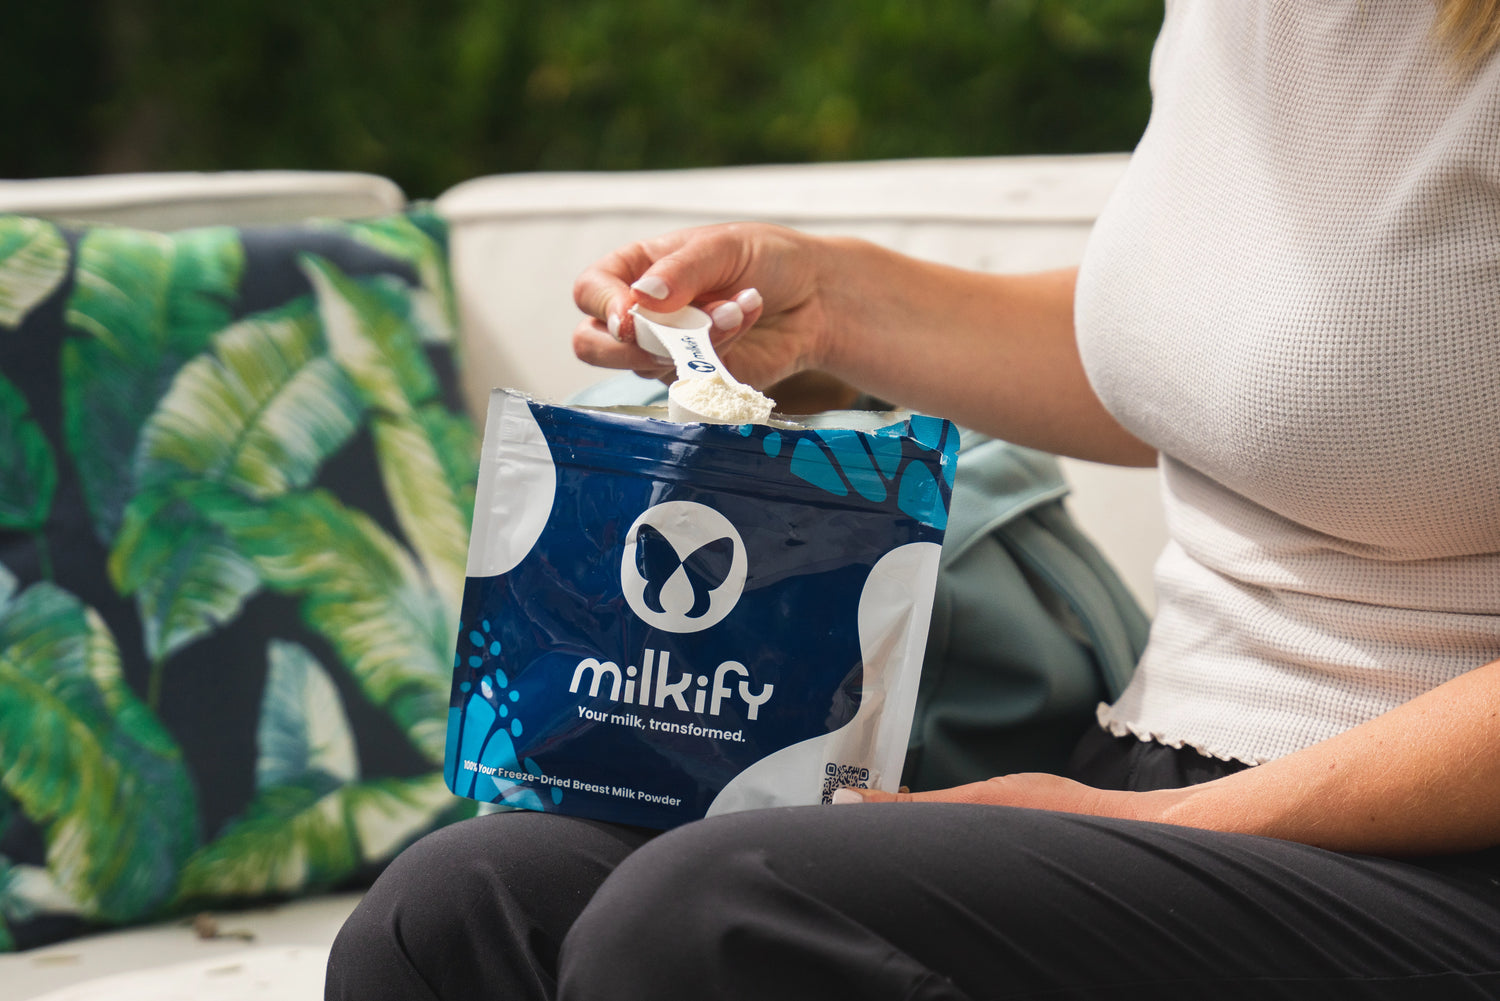 milkify freeze-dried breast milk powder